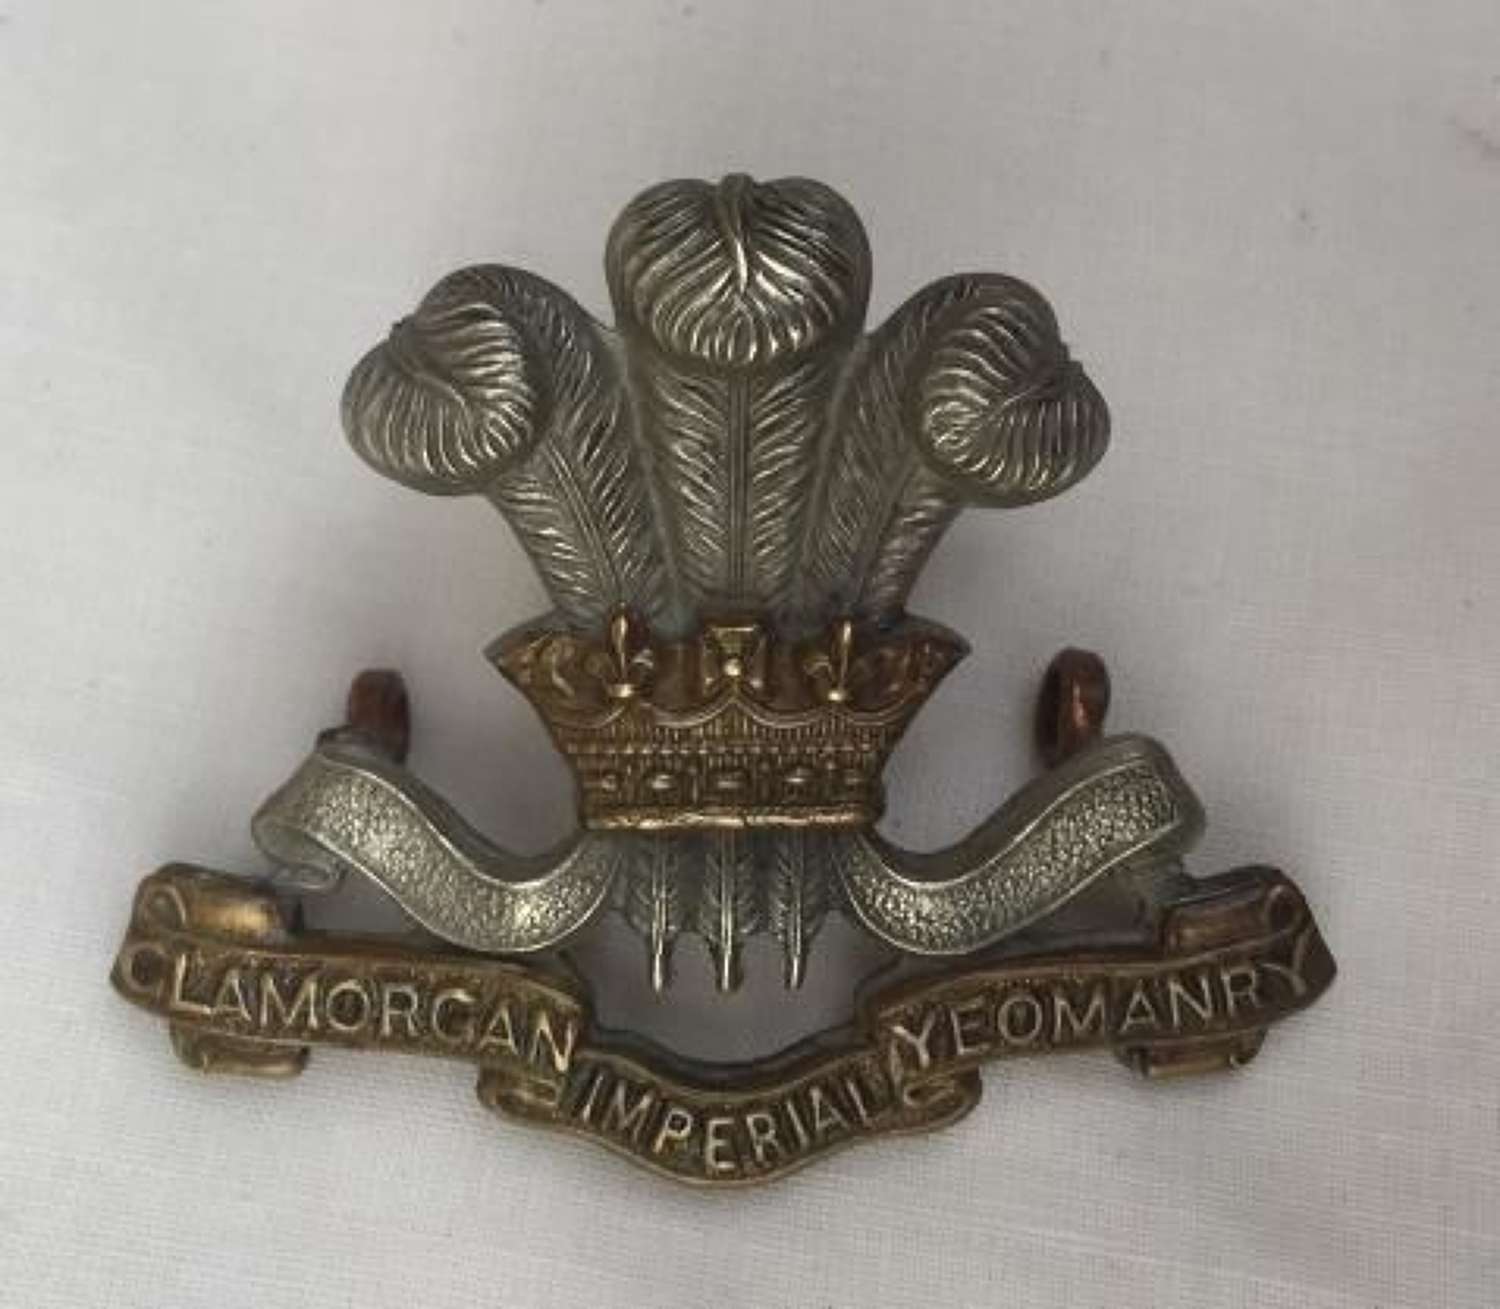 Glamorgan Imperial Yeomanry Cap Badge